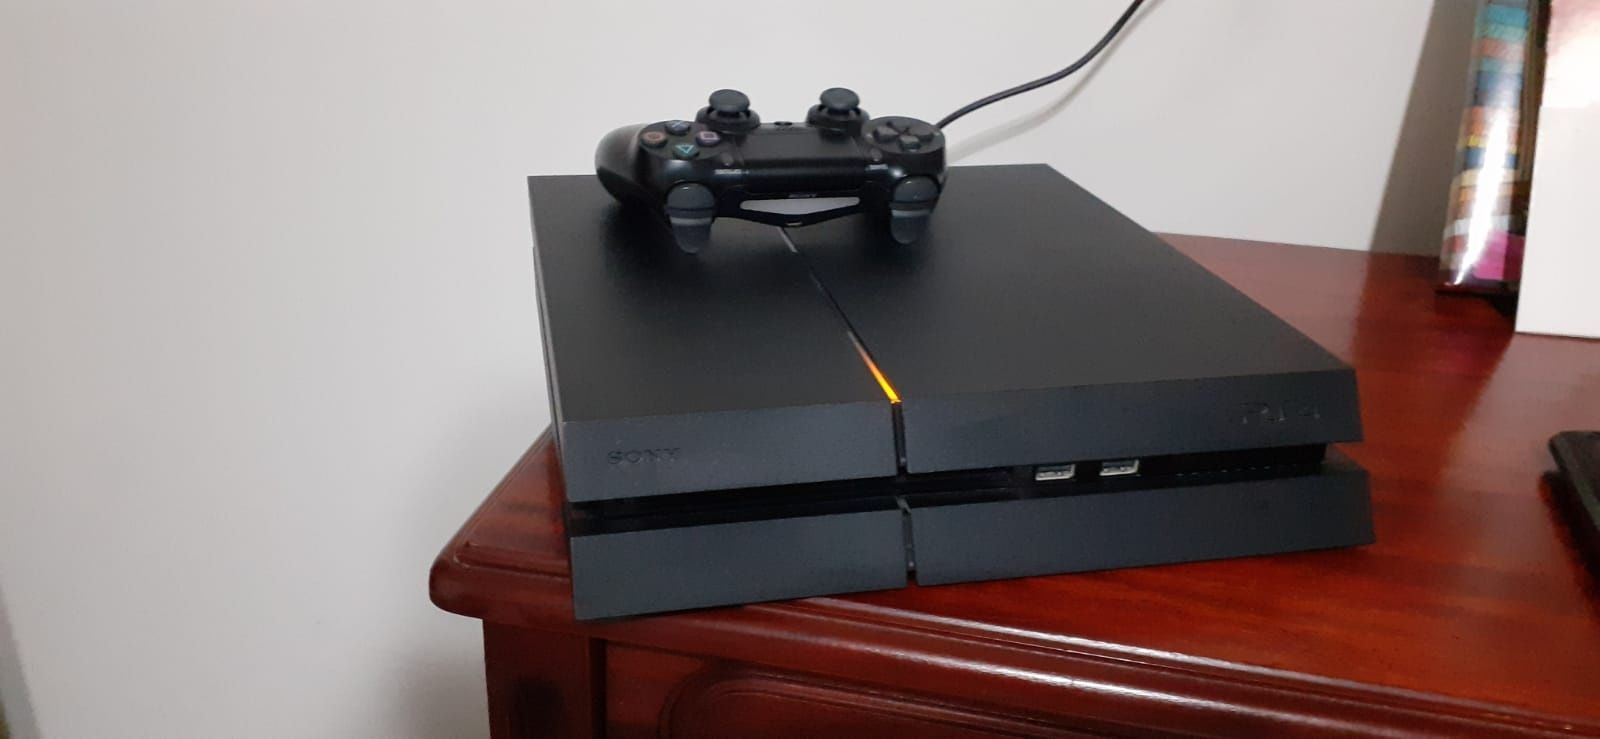 PlayStation 4 de vânzare